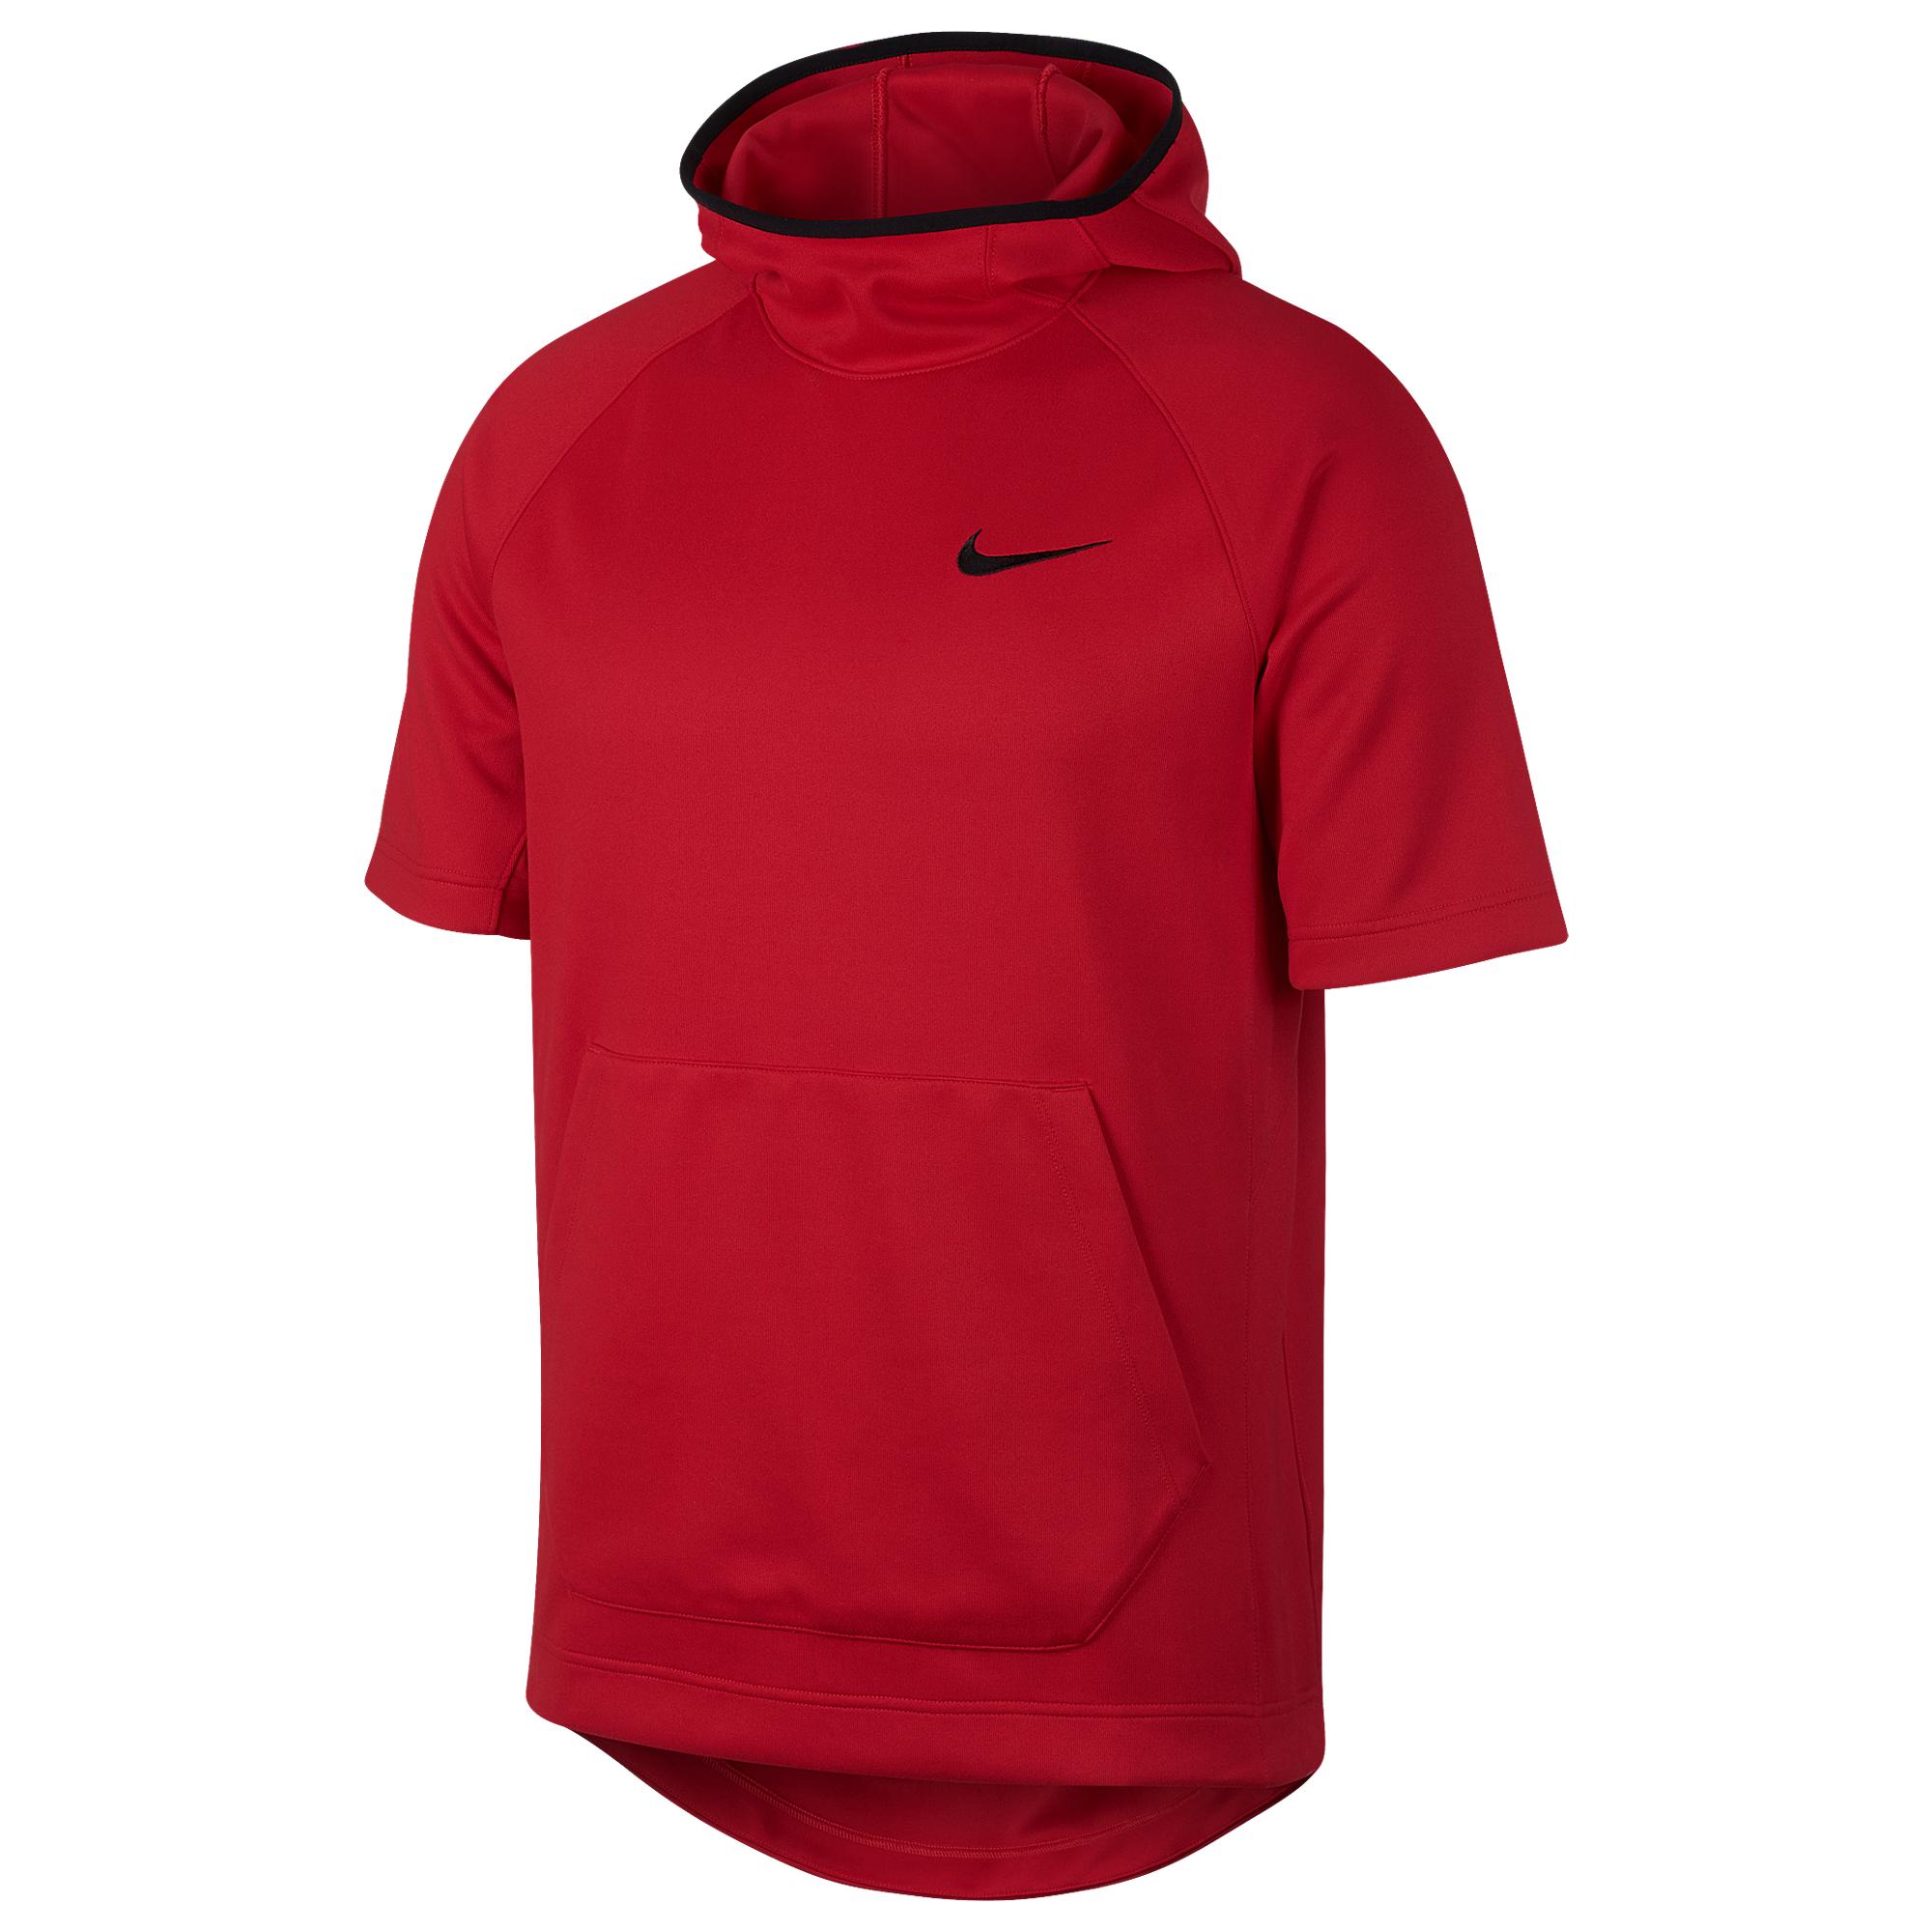 Nike Synthetic Spotlight Short Sleeve Hoodie in University Red/Black (Red)  for Men - Lyst